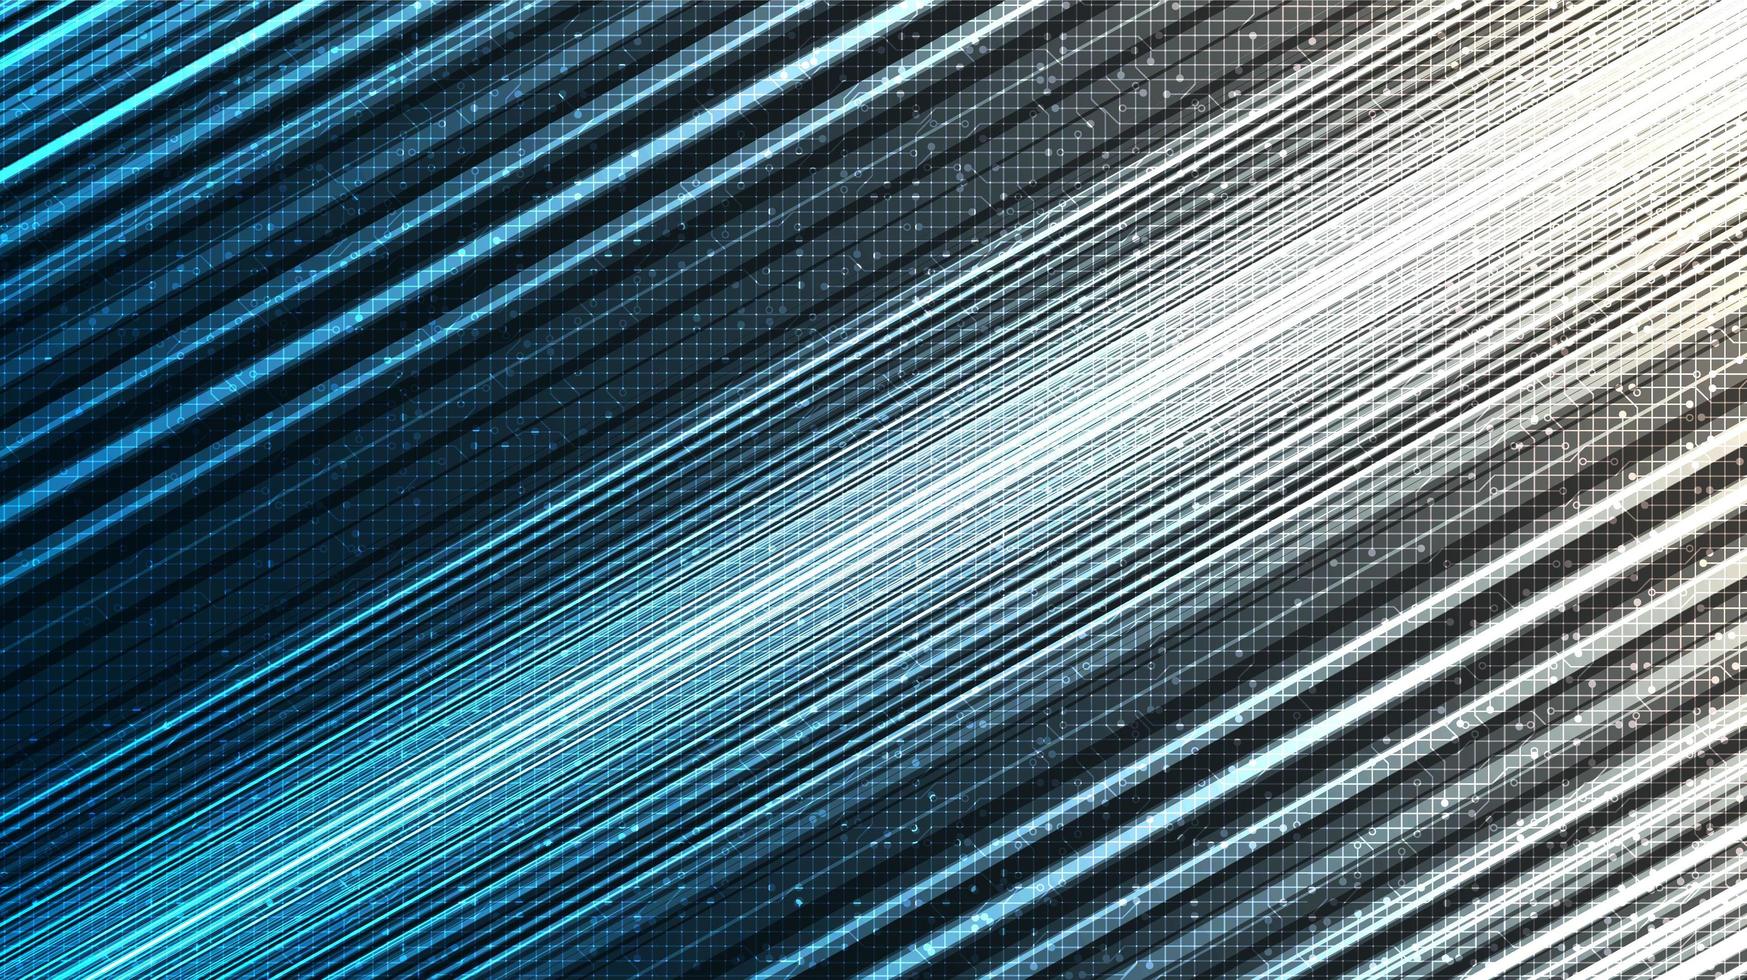 Blue Speed Technology Background,Digital and internet Concept design,Vector illustration. vector